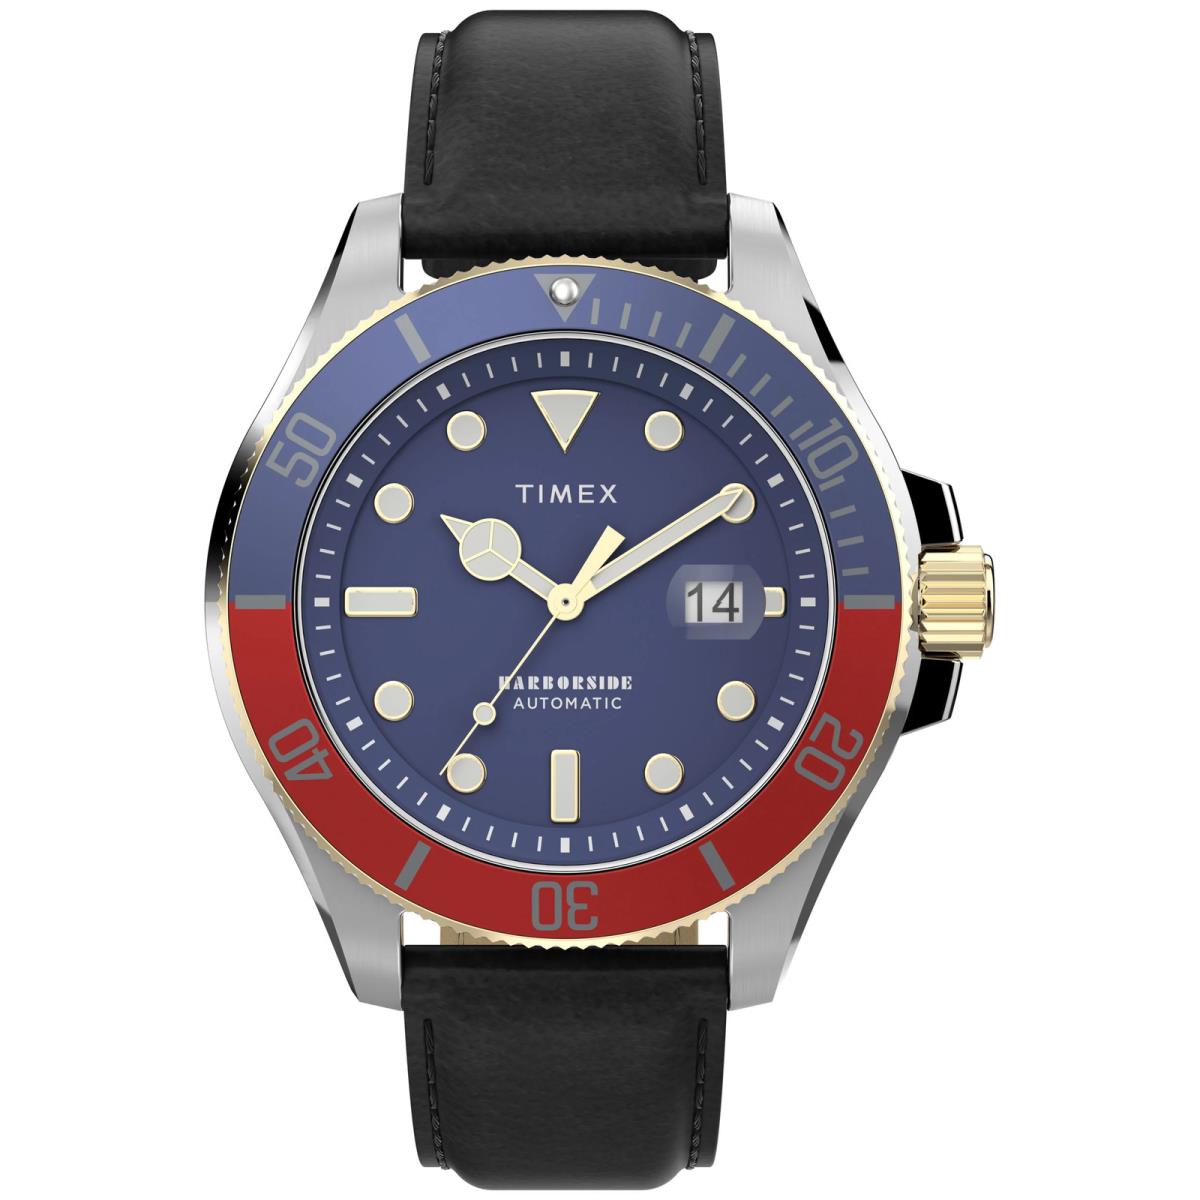 Timex Harborside Coast Automatic 43mm Blue Watch